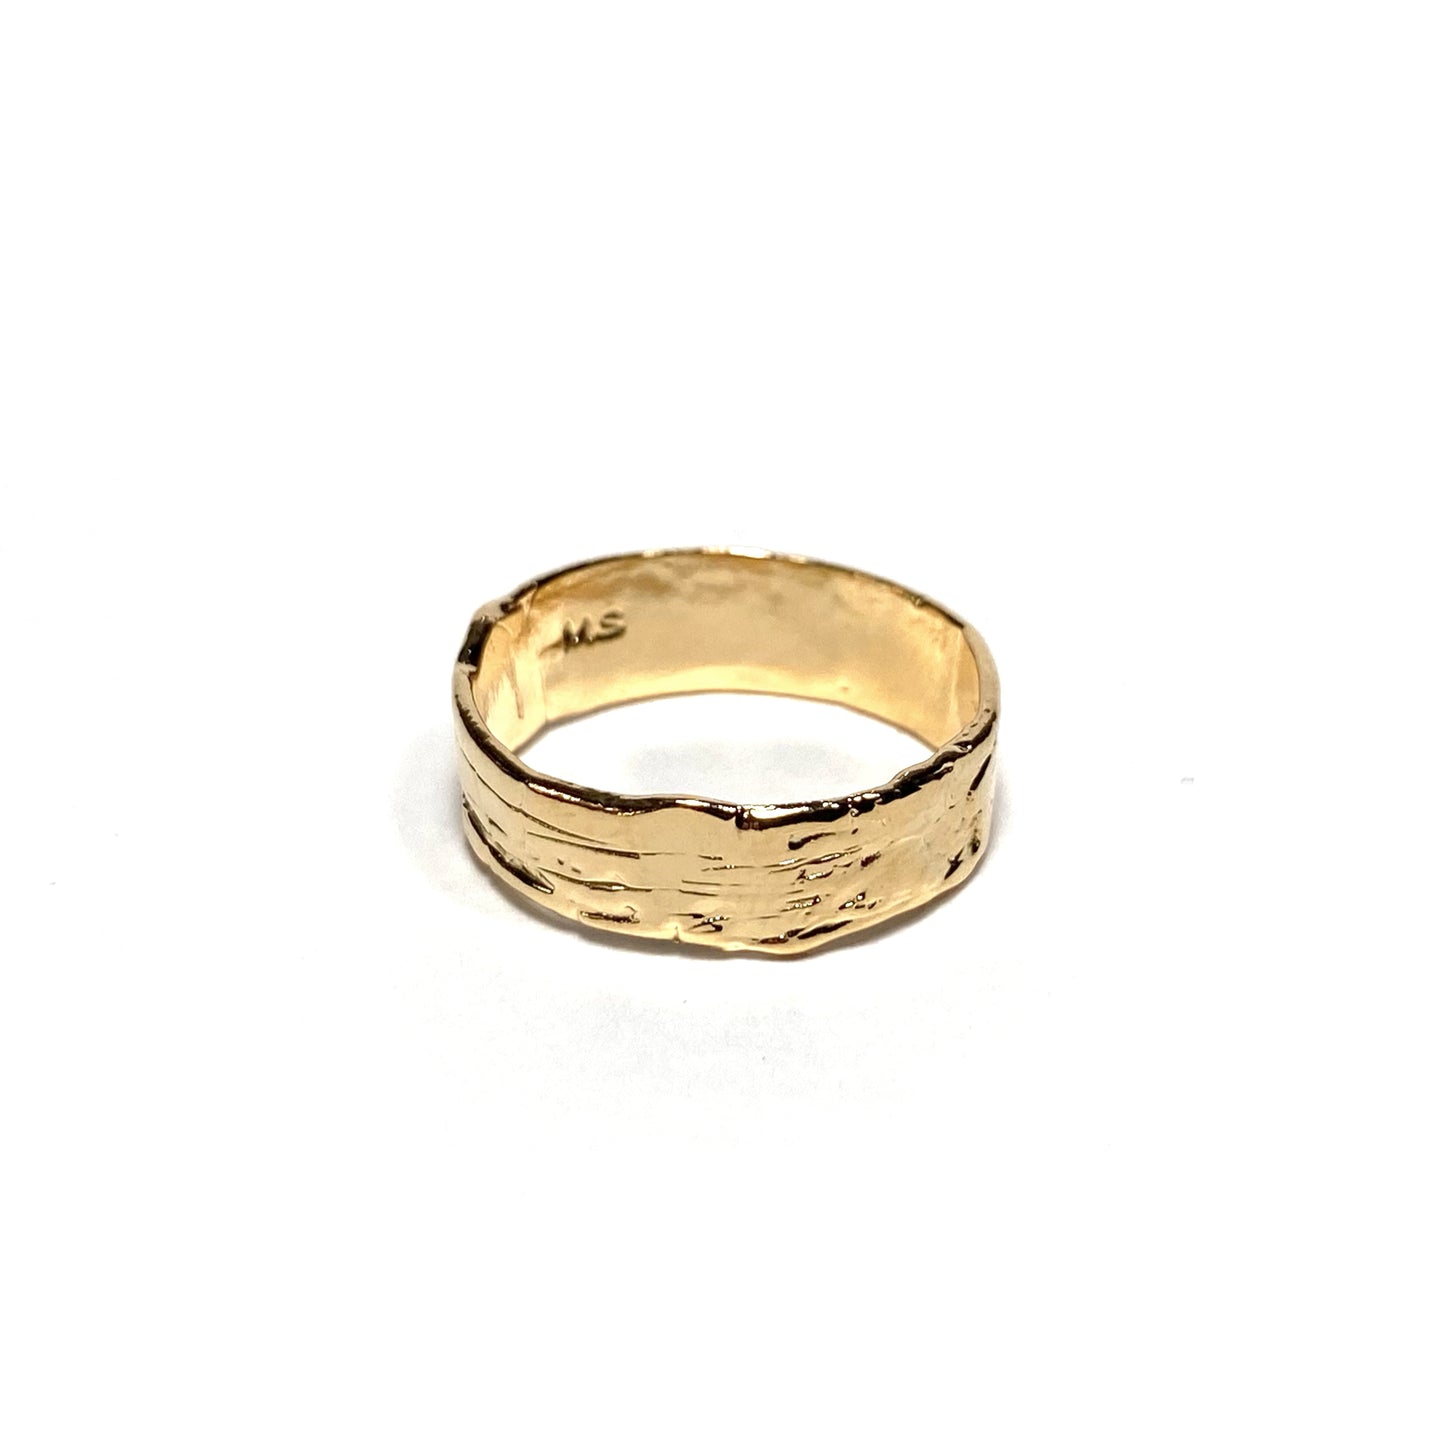 Solid gold Goleta wedding band ring